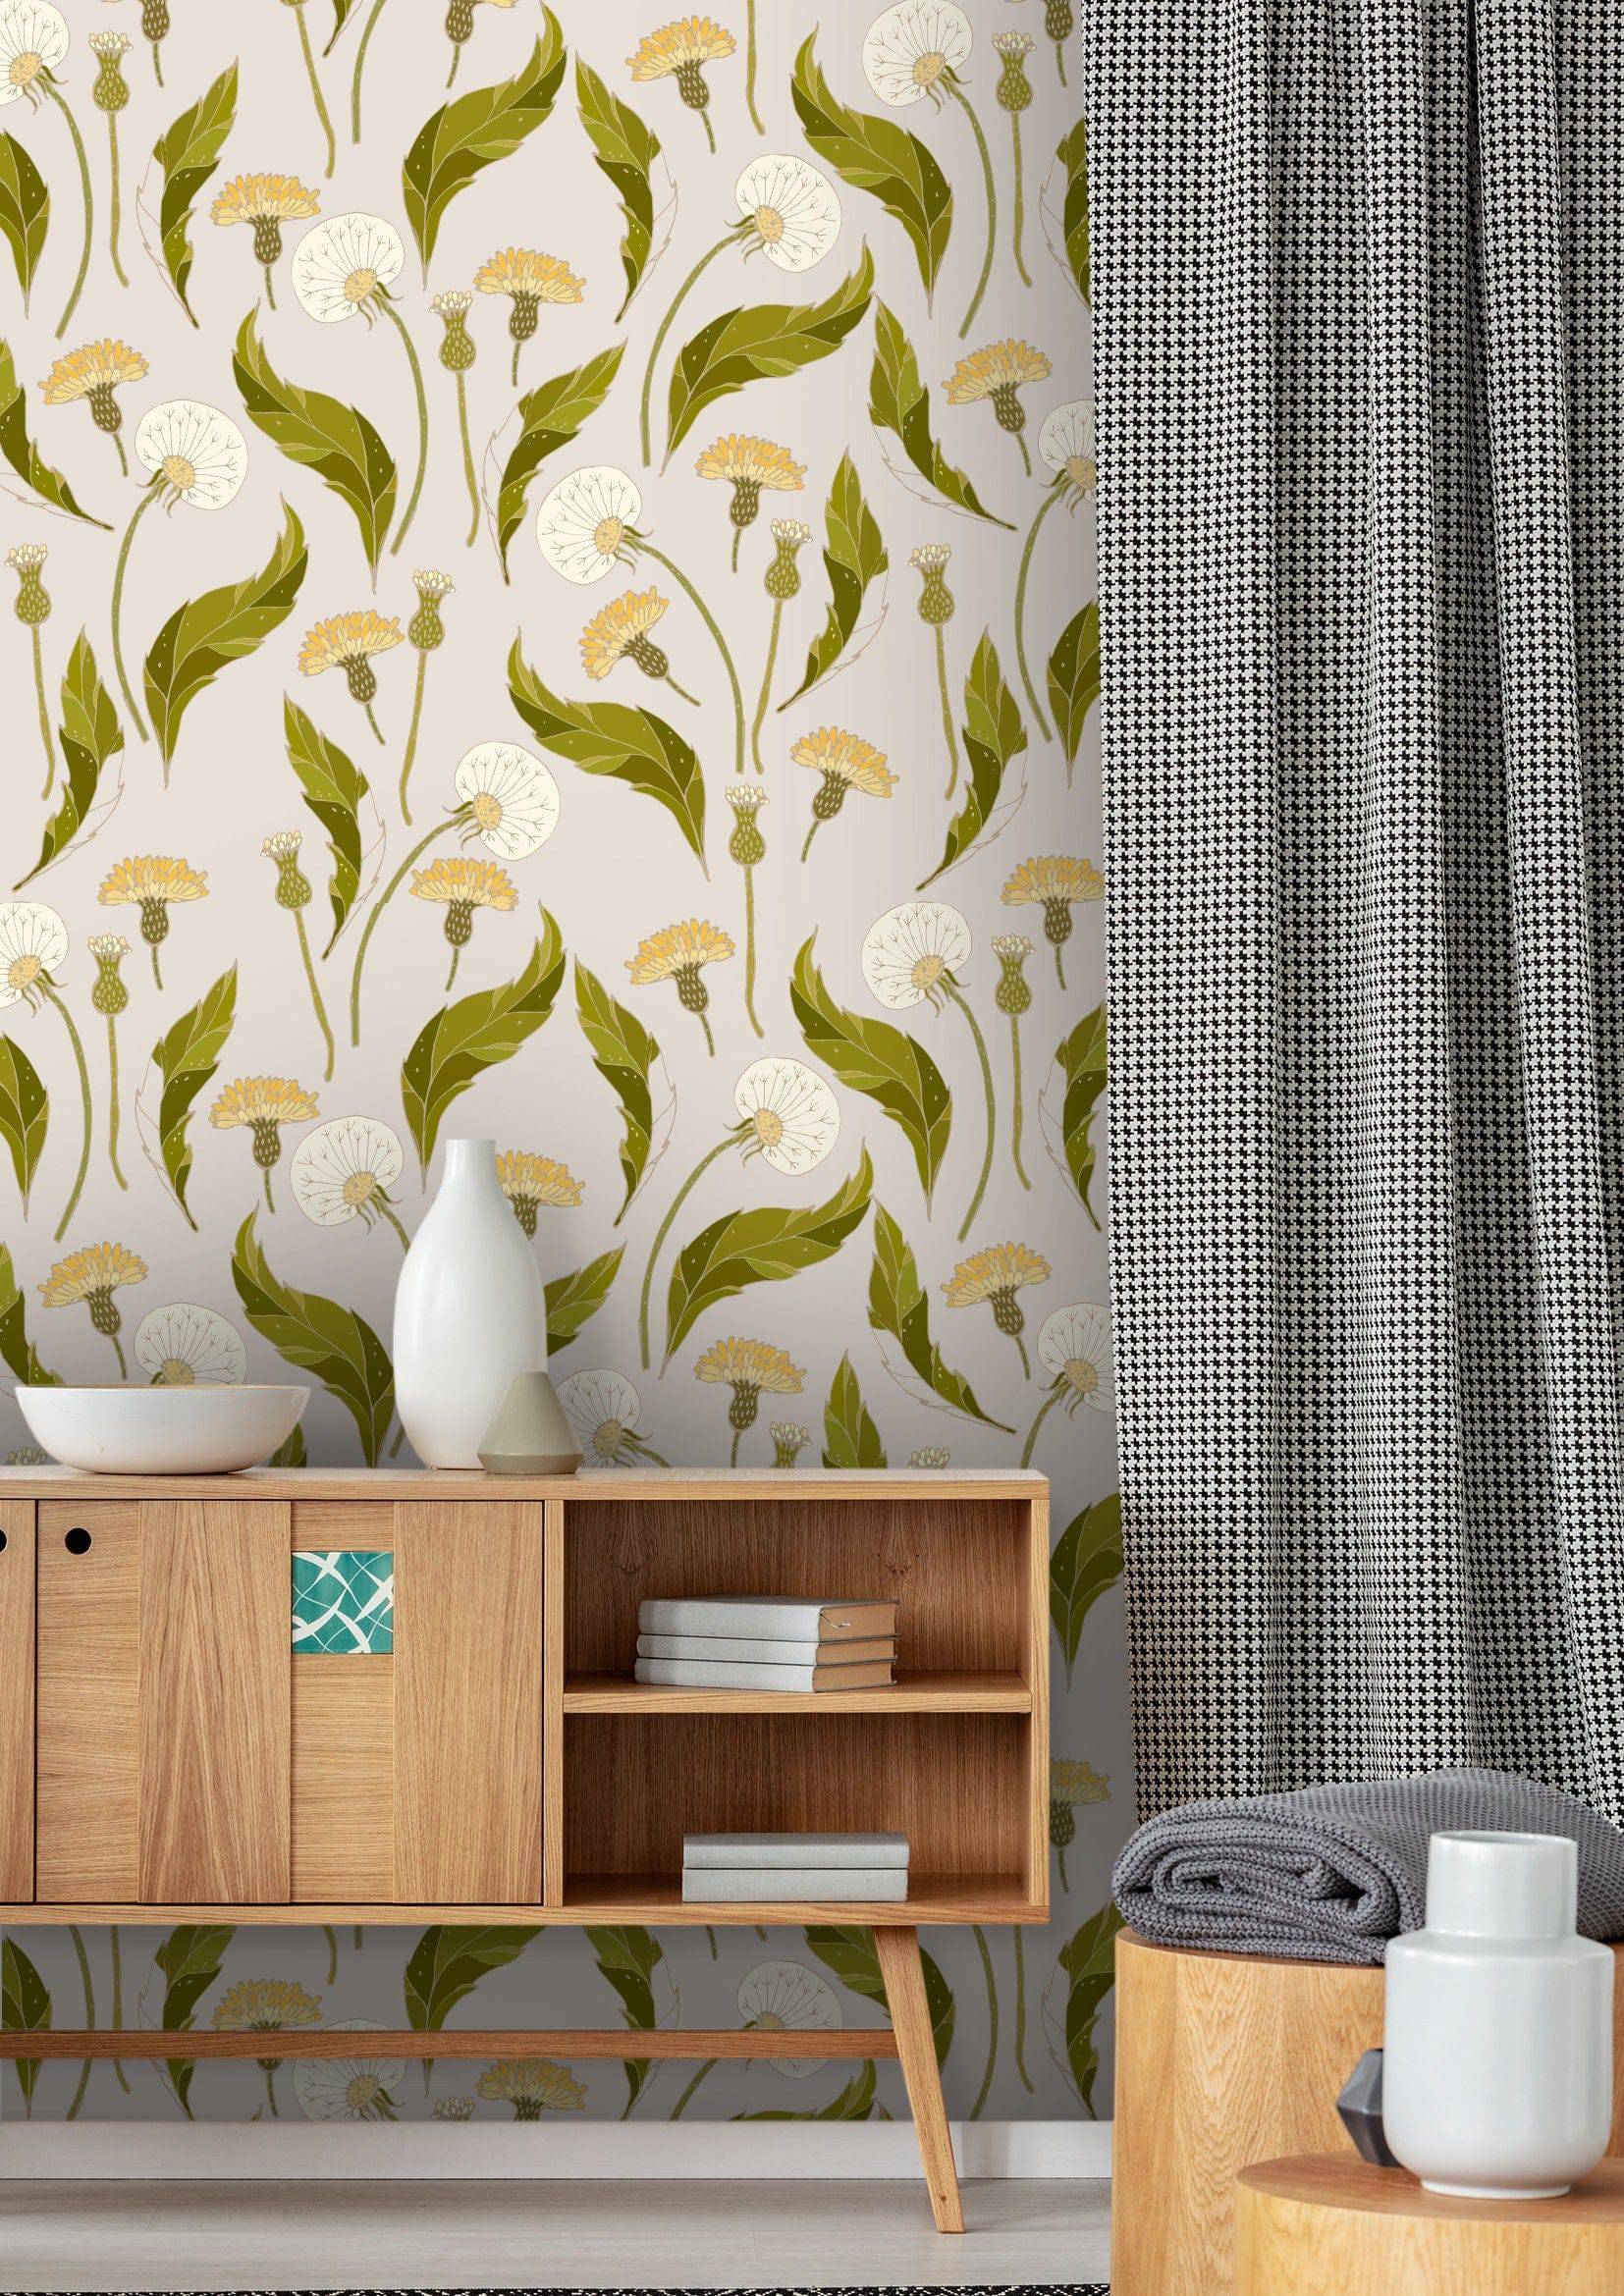 Dandelion Floral Wallpaper | Wallpaper Peel and Stick | Removable Wallpaper | Peel and Stick Wallpaper | Wall Paper Peel And Stick 2094 - JamesAndColors